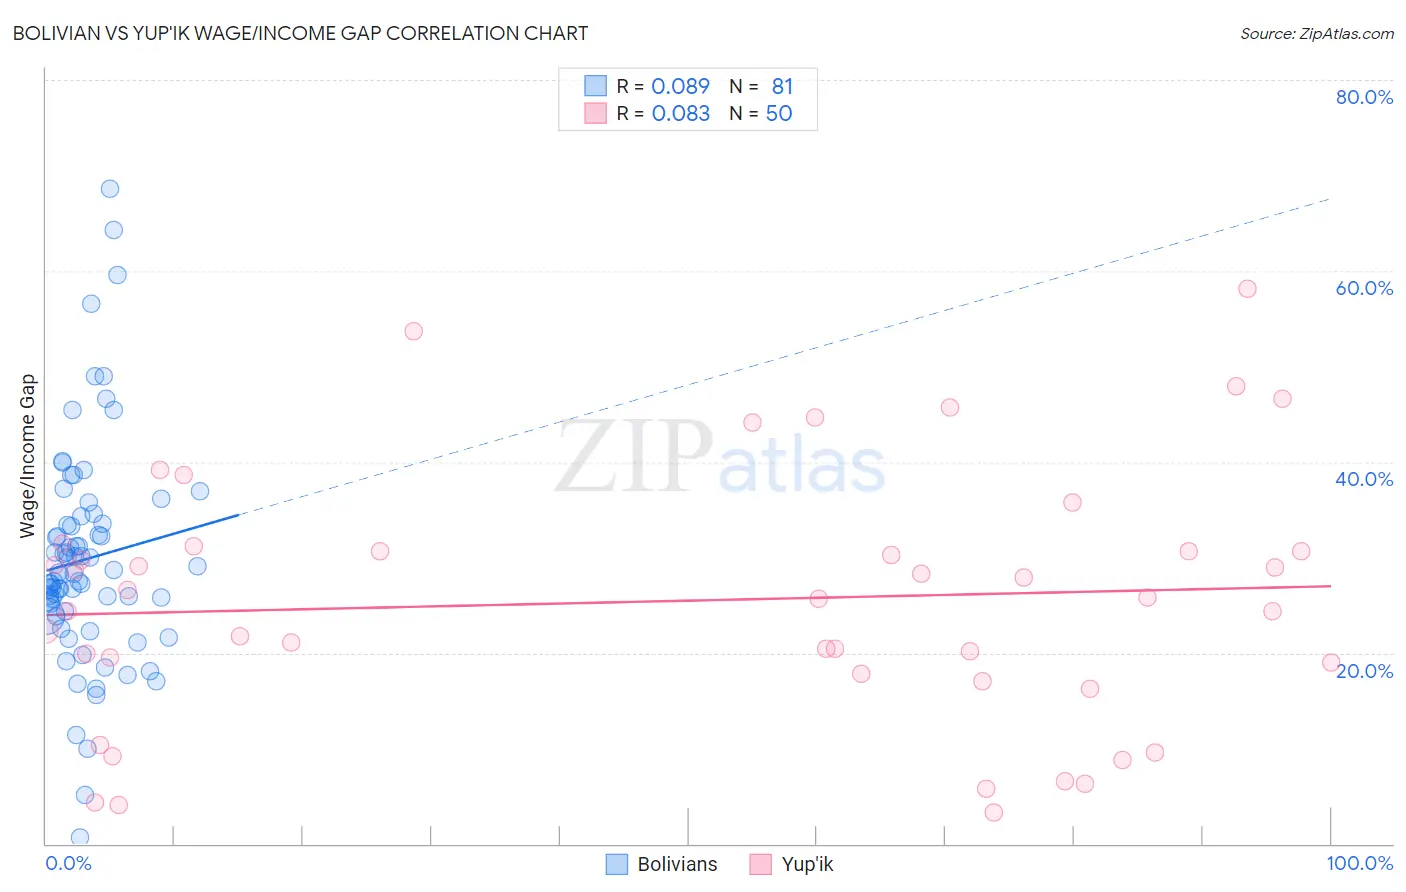 Bolivian vs Yup'ik Wage/Income Gap